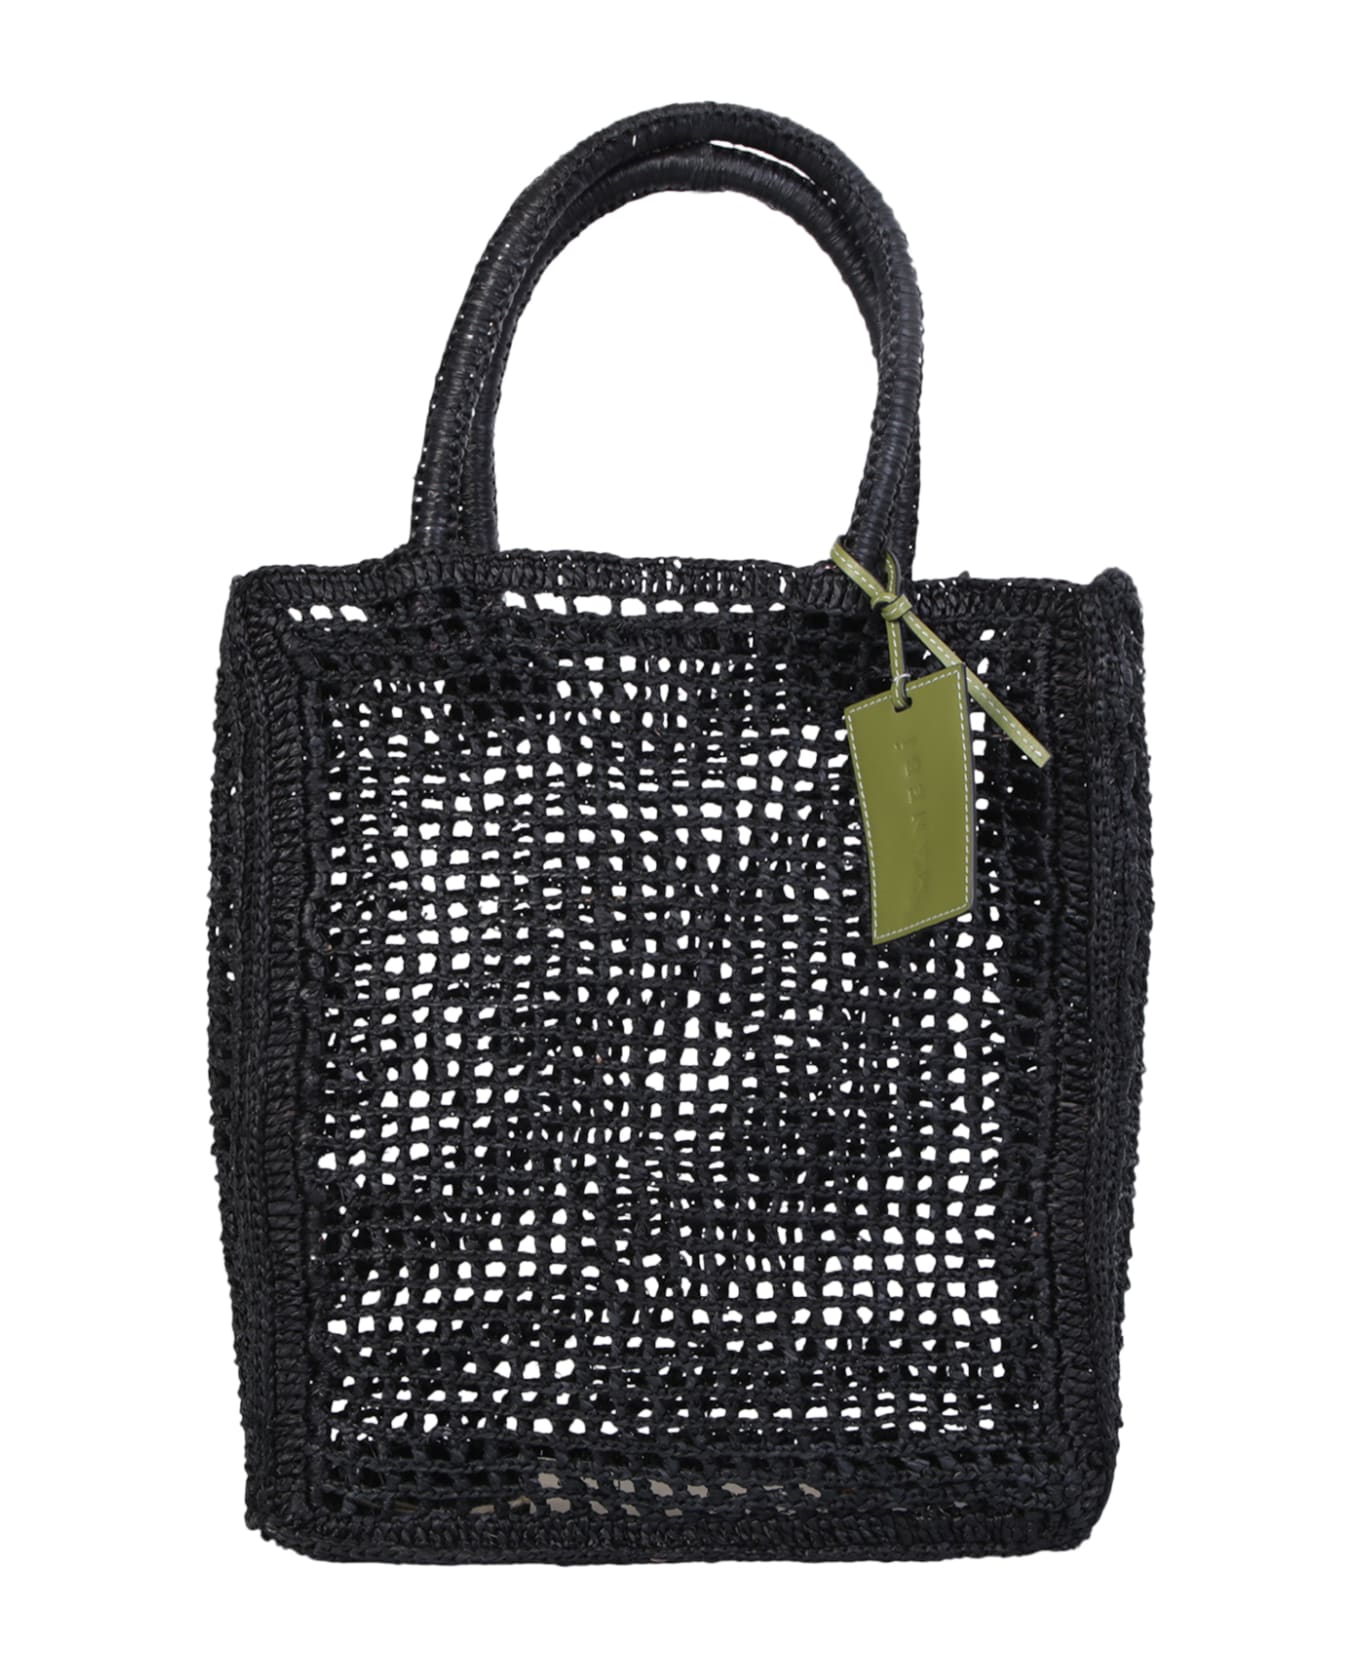 Manebi Woven Raffia Black Bag By Manebi - Black トートバッグ